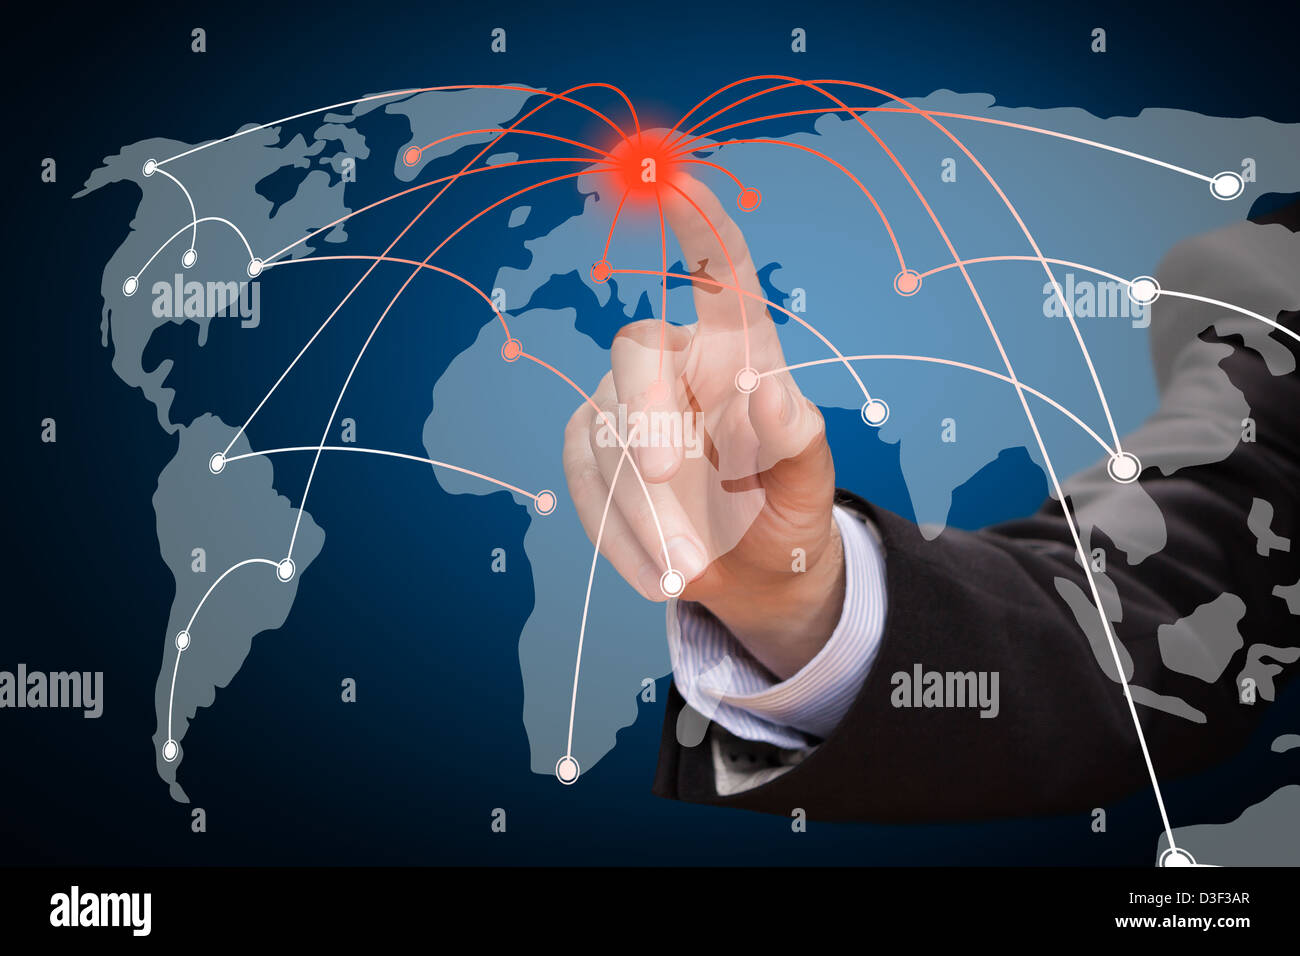 Business man touching world map screen. Social network. Stock Photo